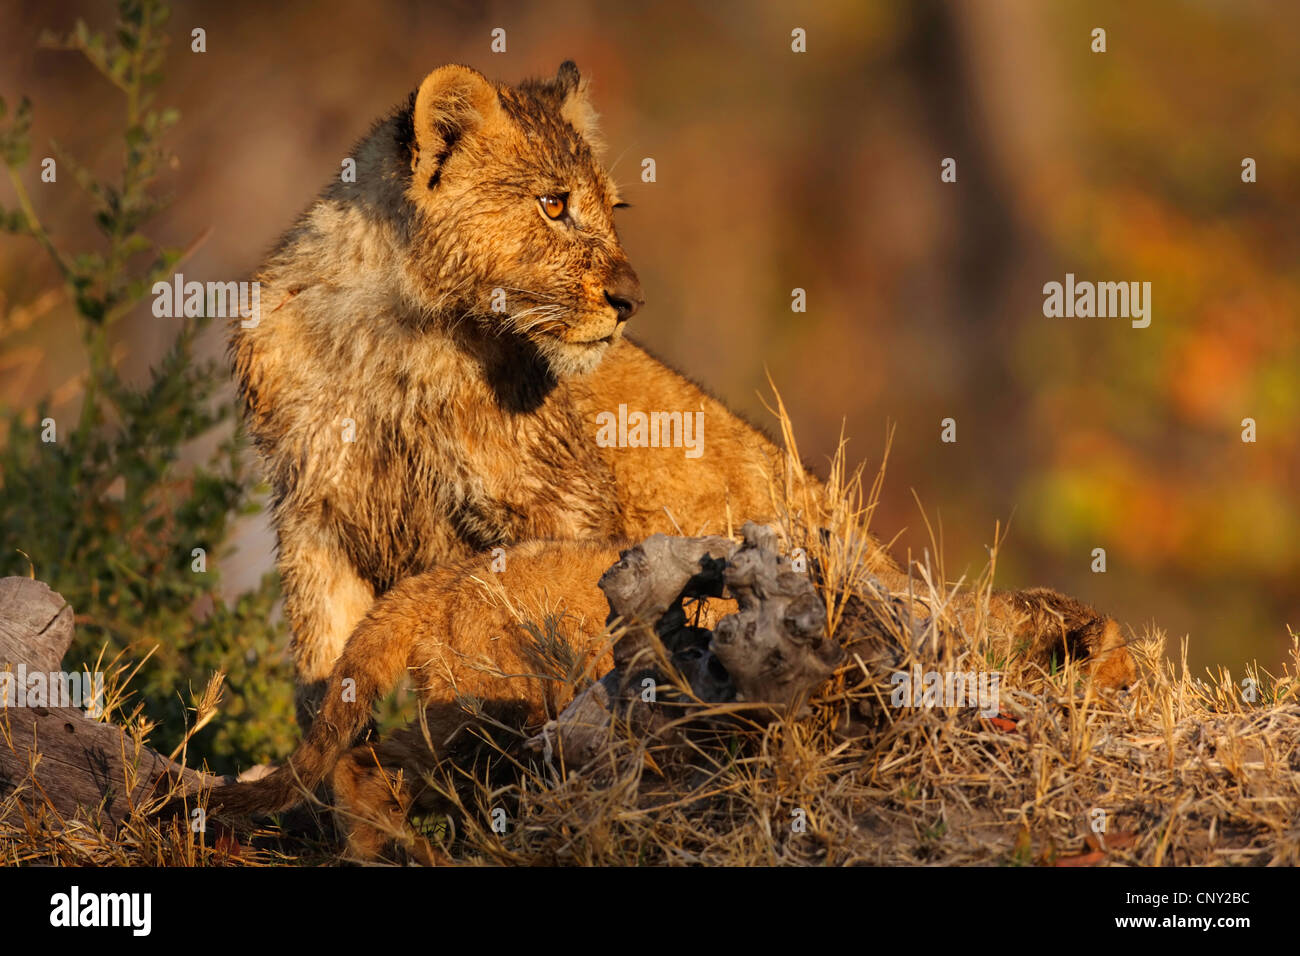 Lion (Panthera leo), lion cub, Botswana, Chobe National Park Banque D'Images